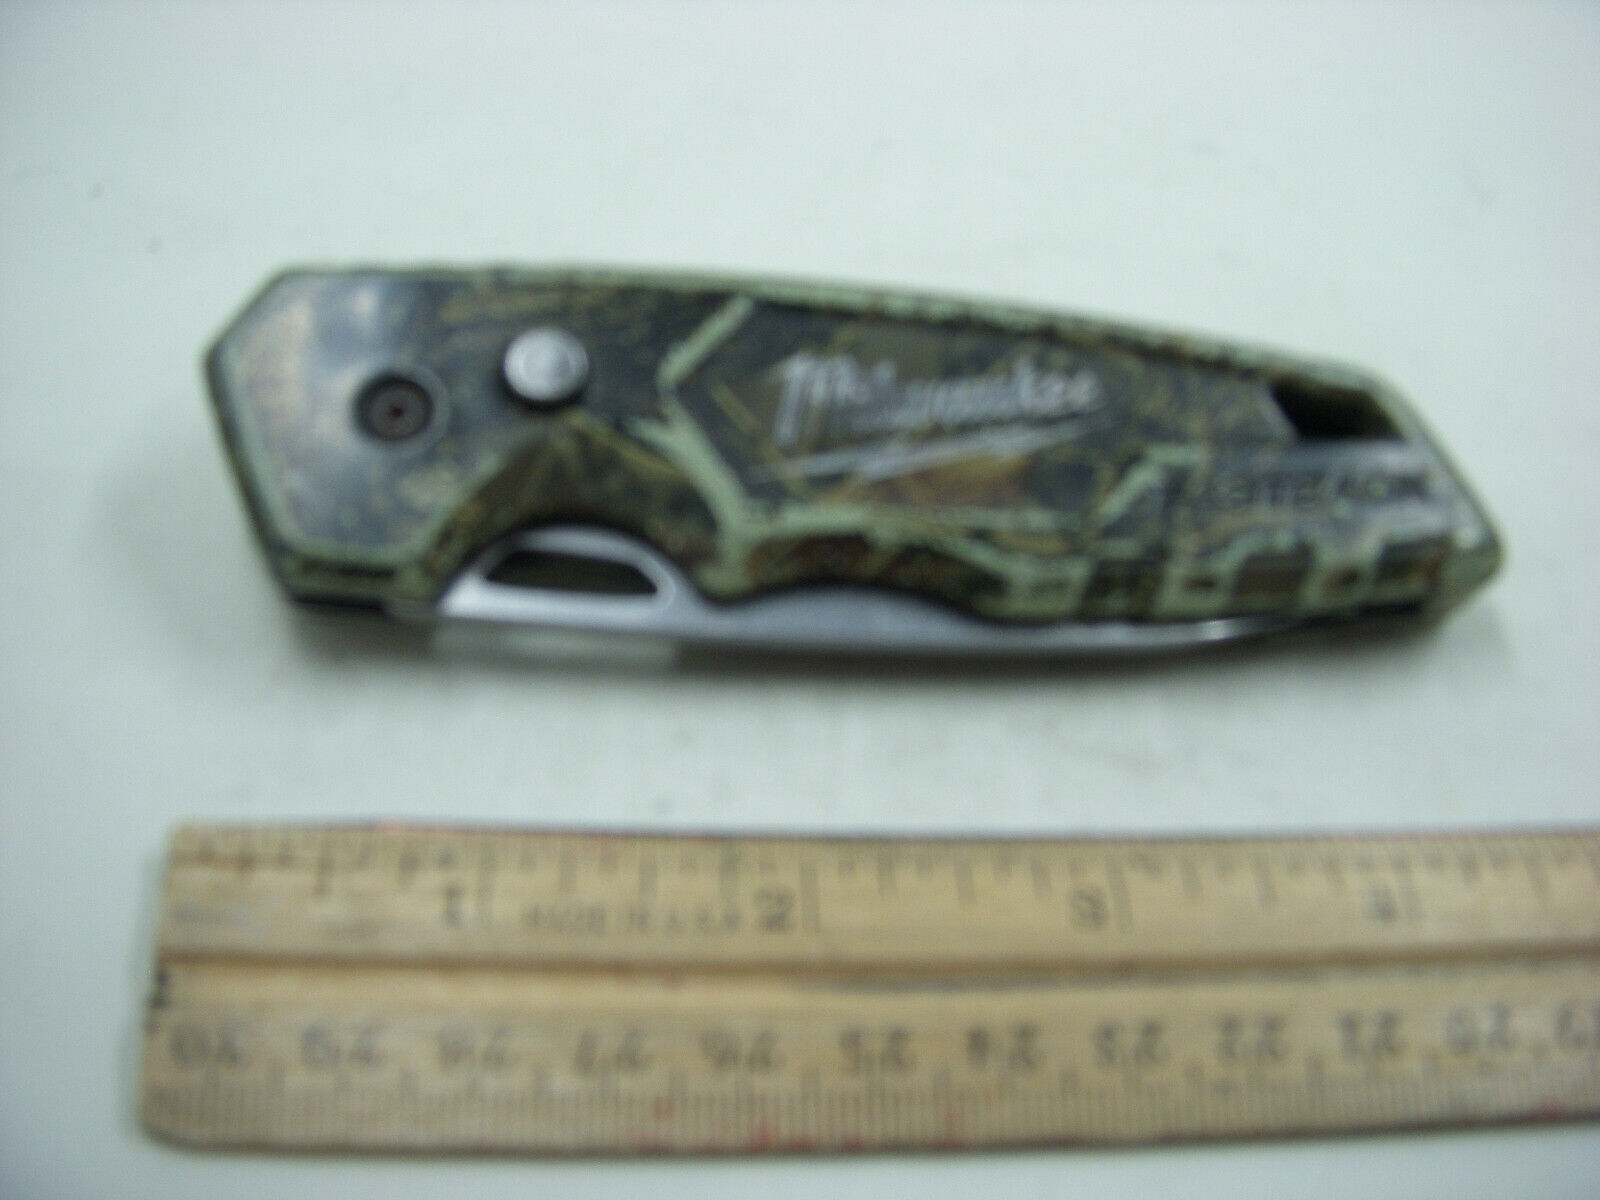 Milwaukee Fastback 48-22-1524 Camouflage Single Blade Locking Knife